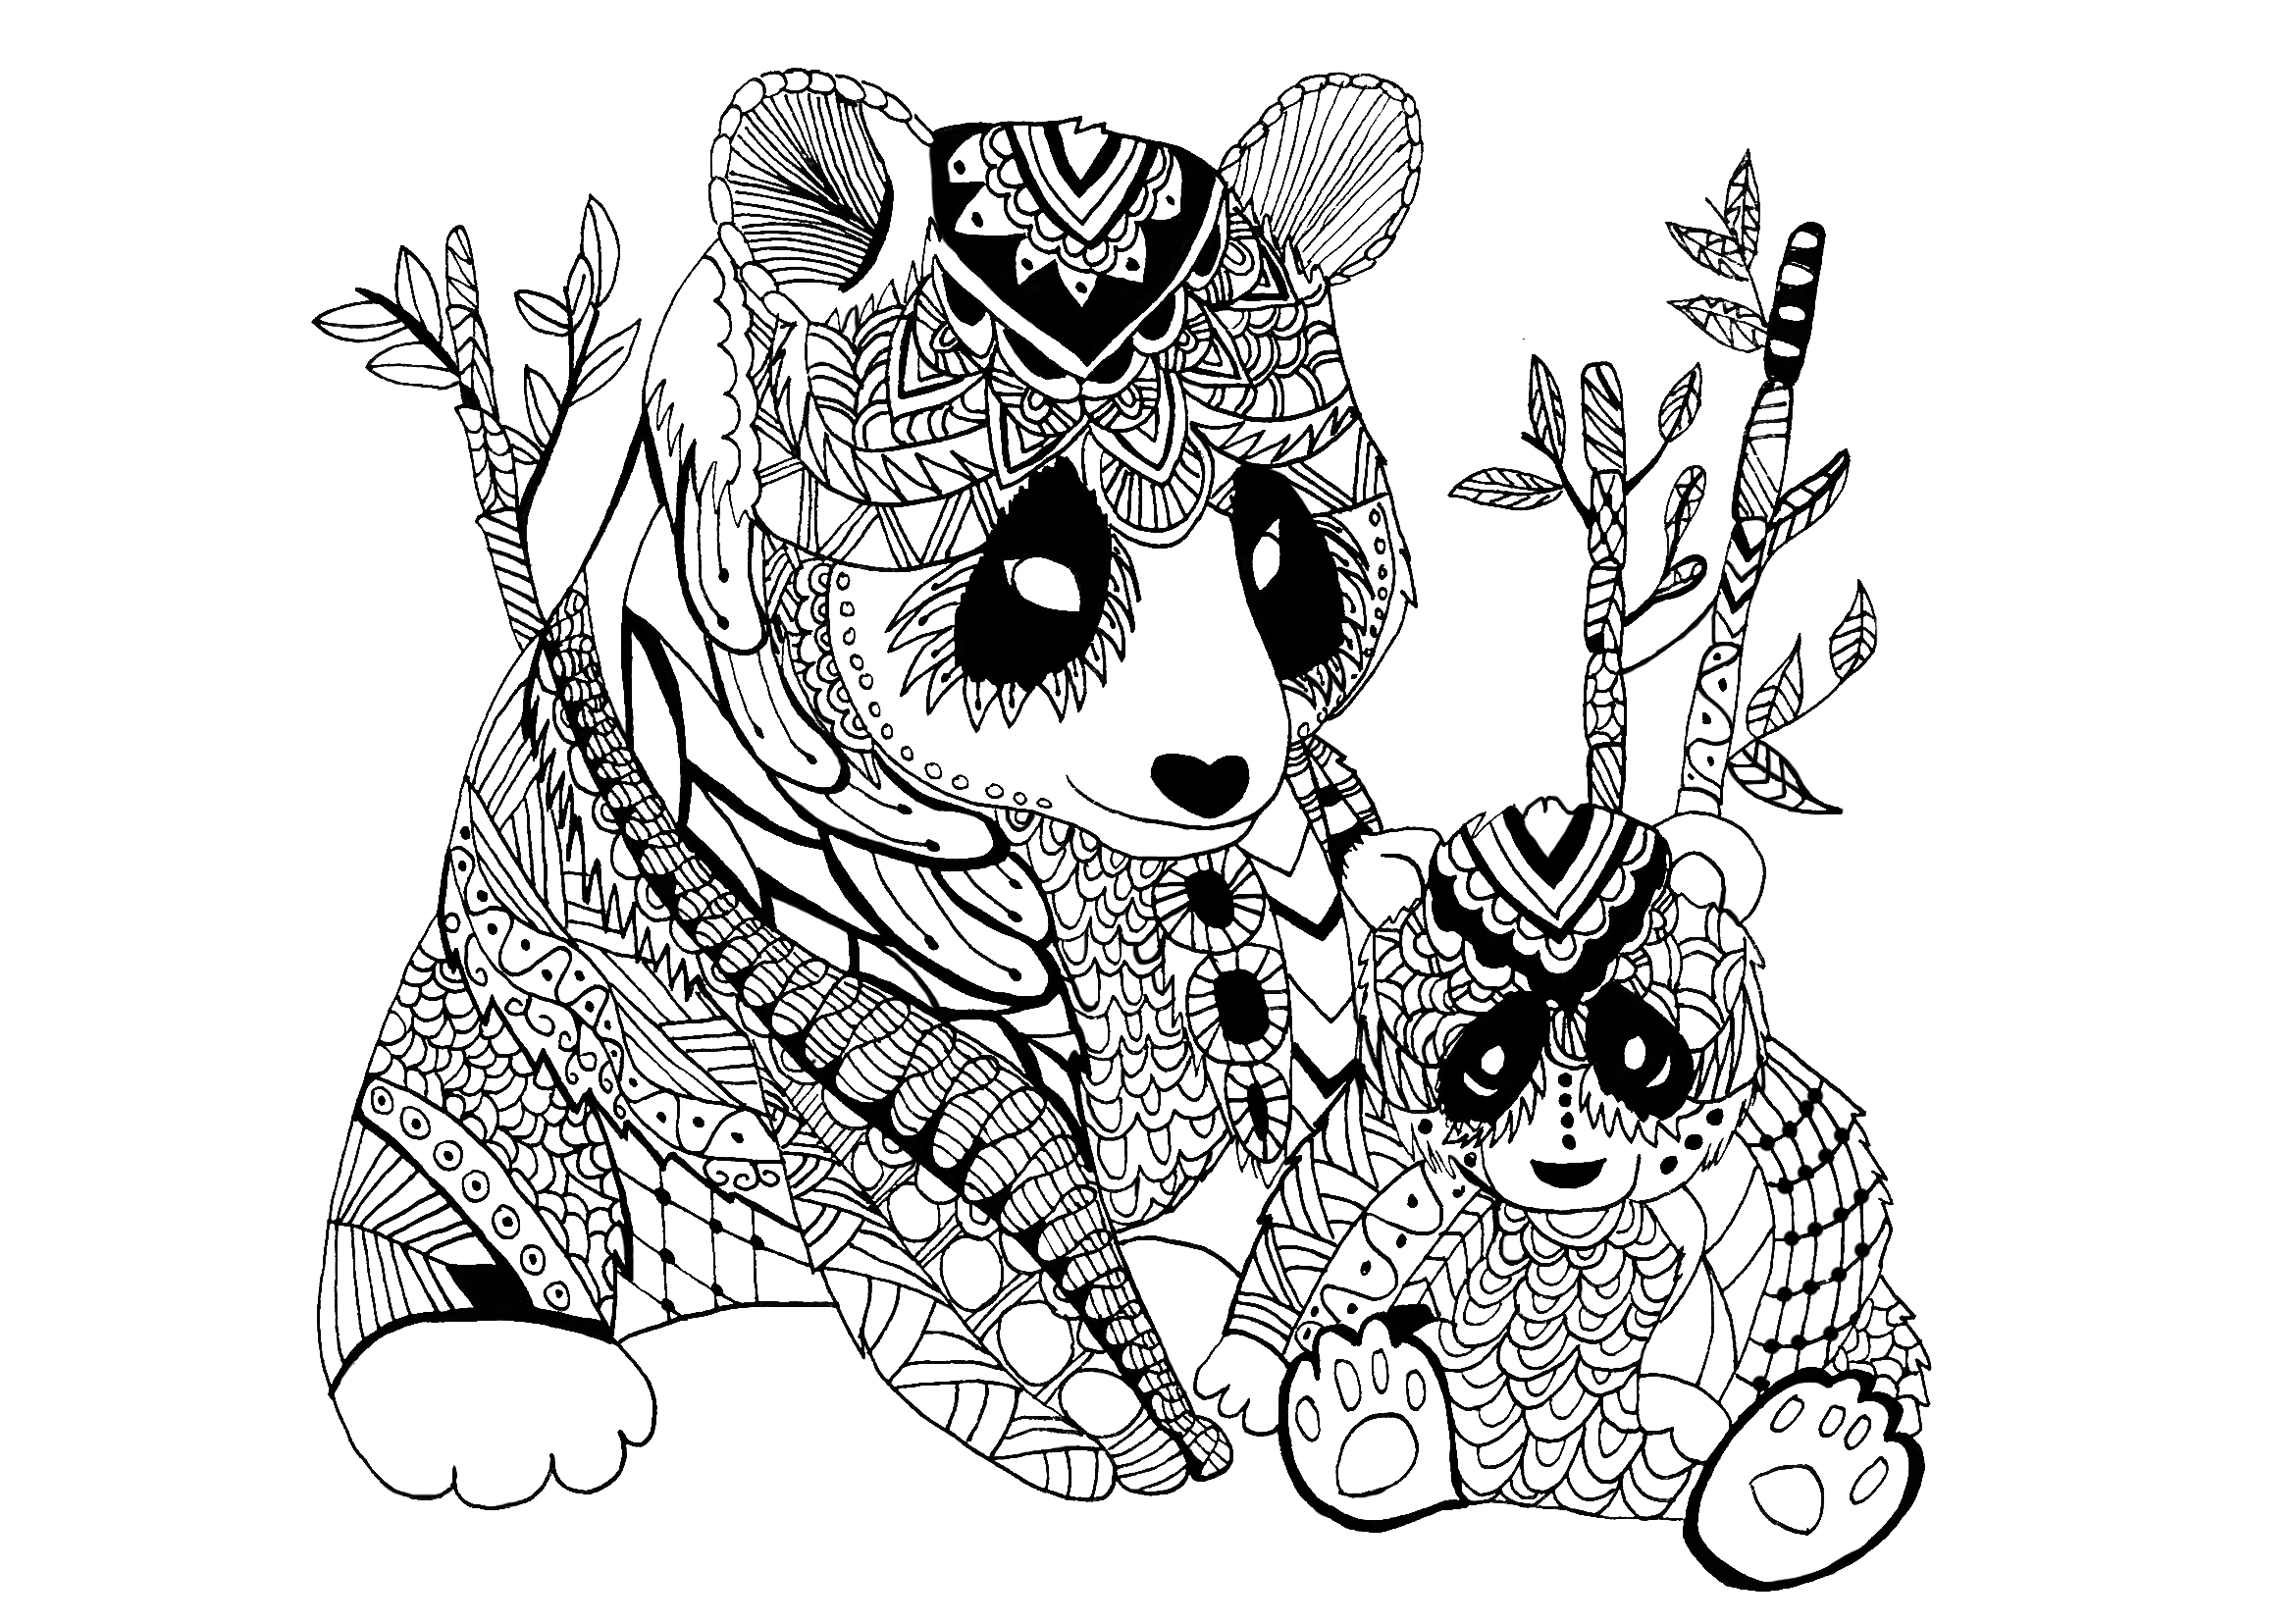 cute panda coloring page